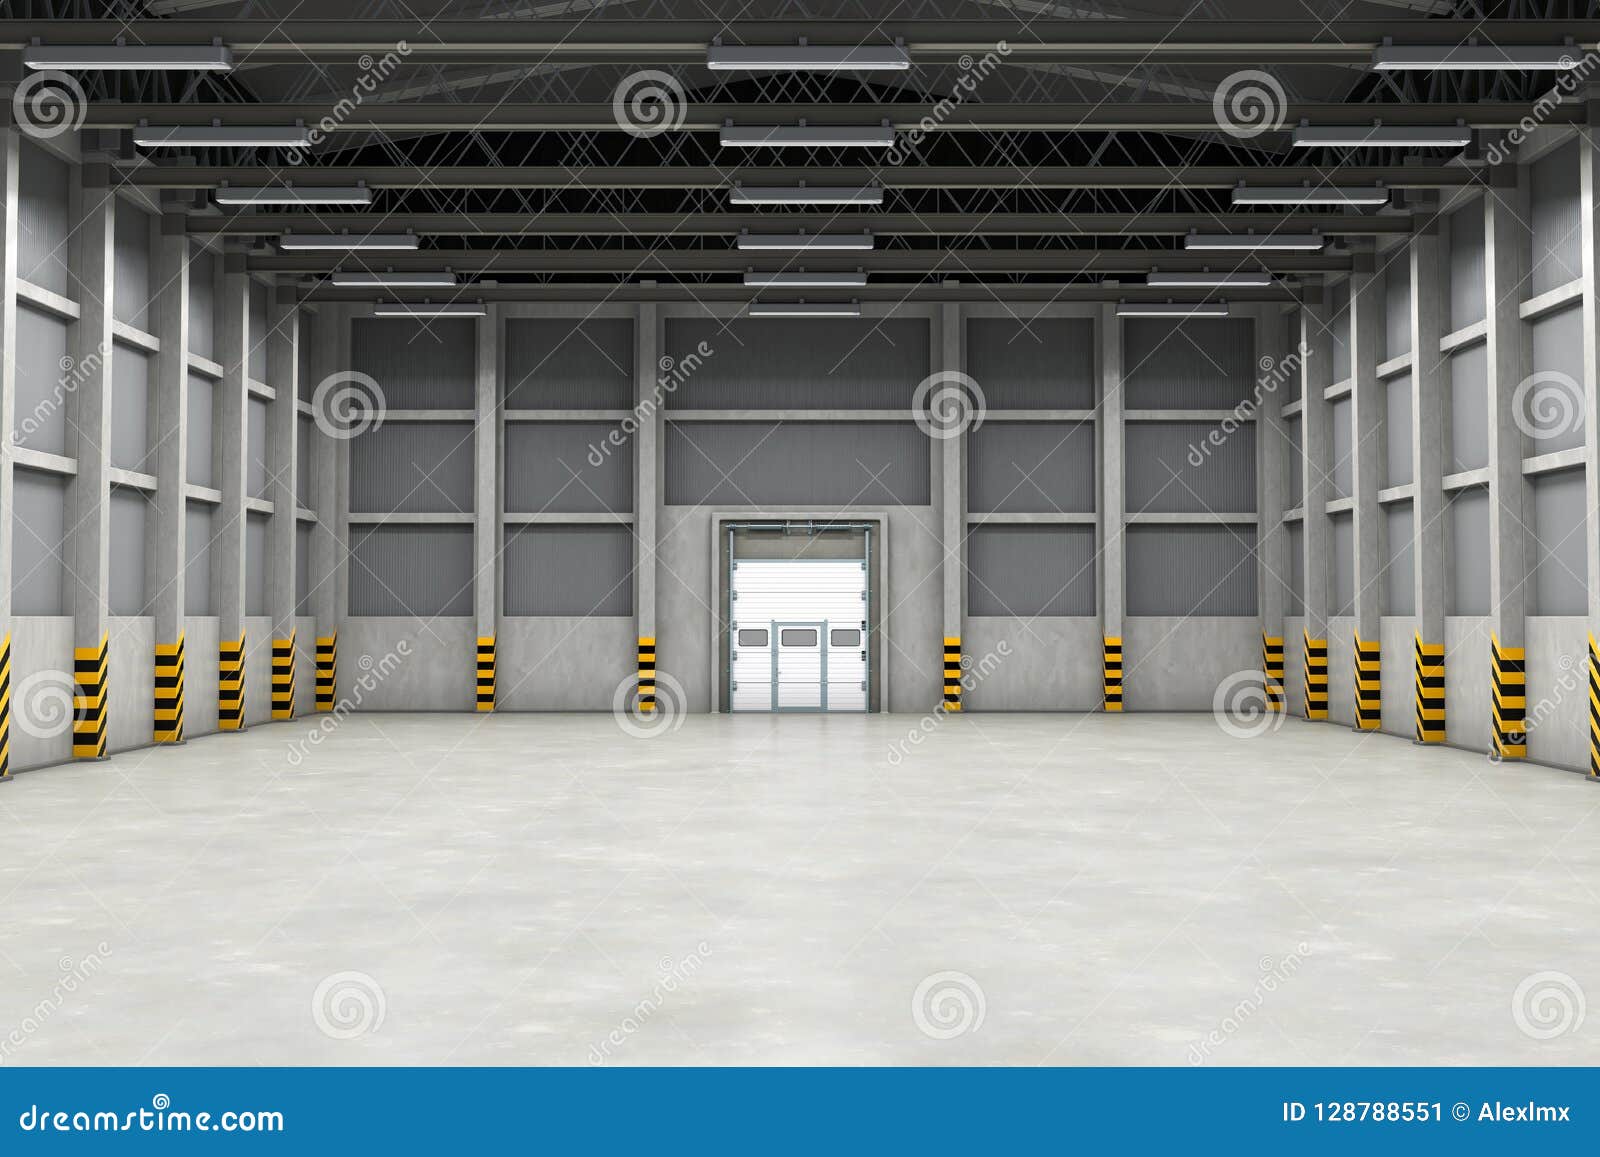 Empty Warehouse Interior Or Industrial Building 3d Rendering